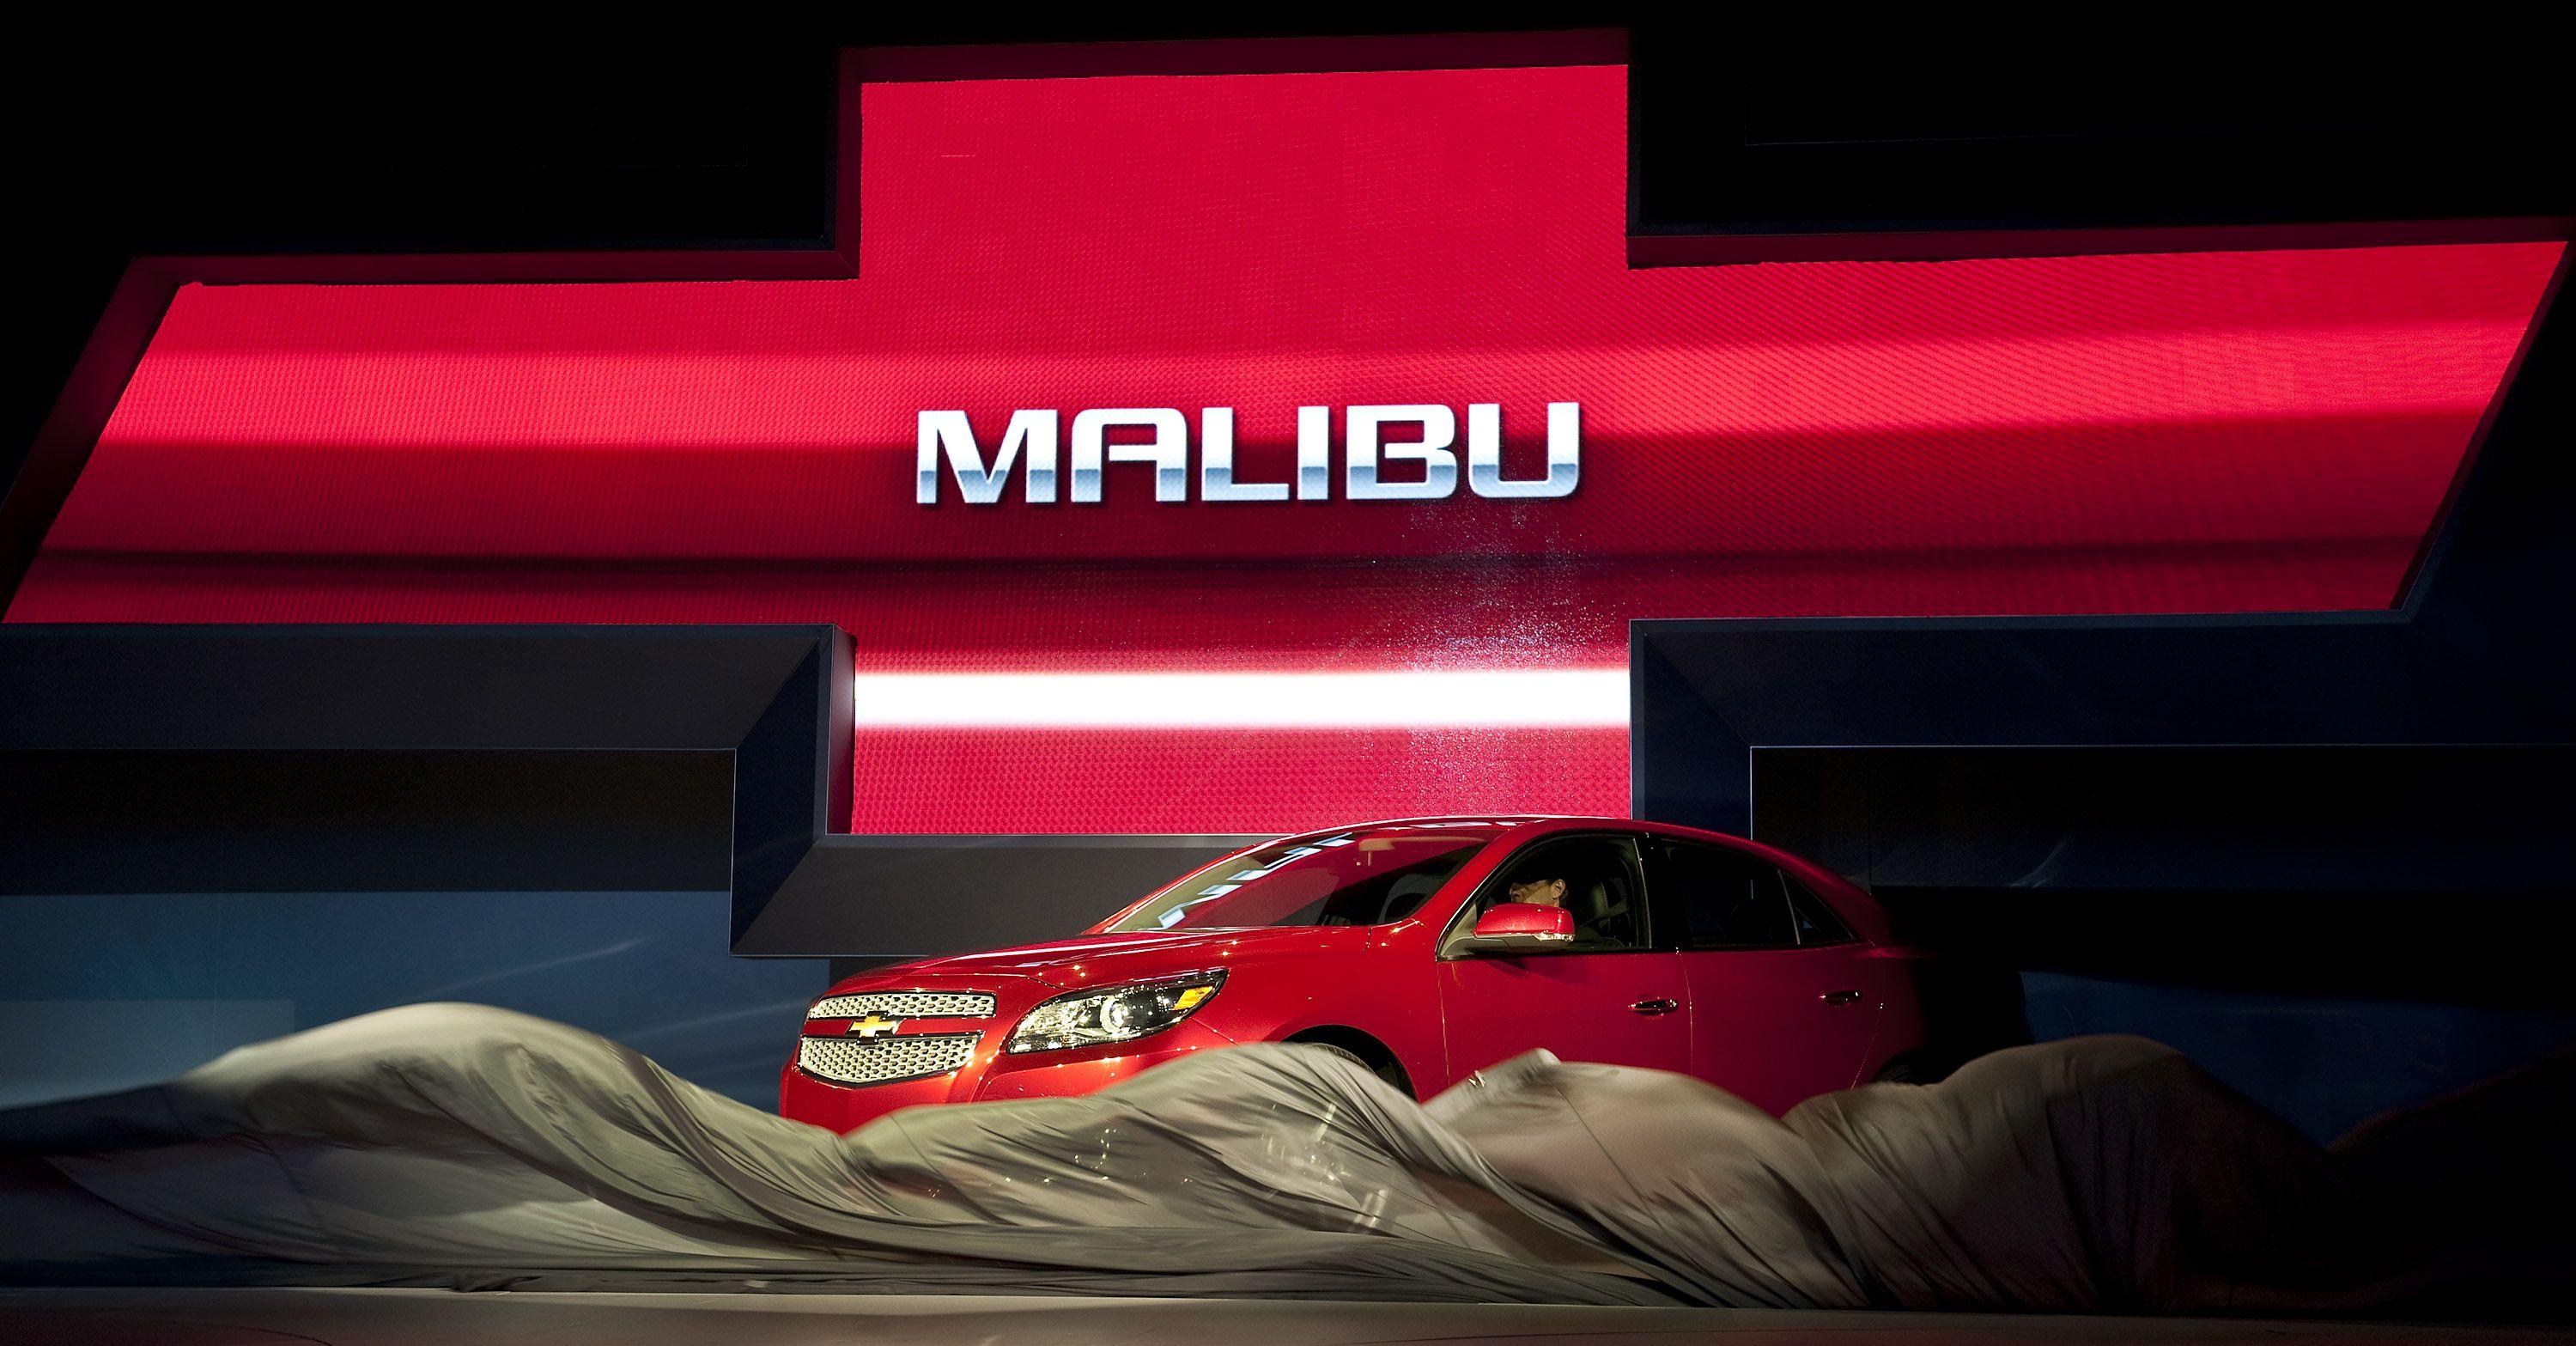 Chevrolet Malibu Logo - 2013 Chevrolet Malibu at Bob Maguire Chevy | The Maguire Auto Blog